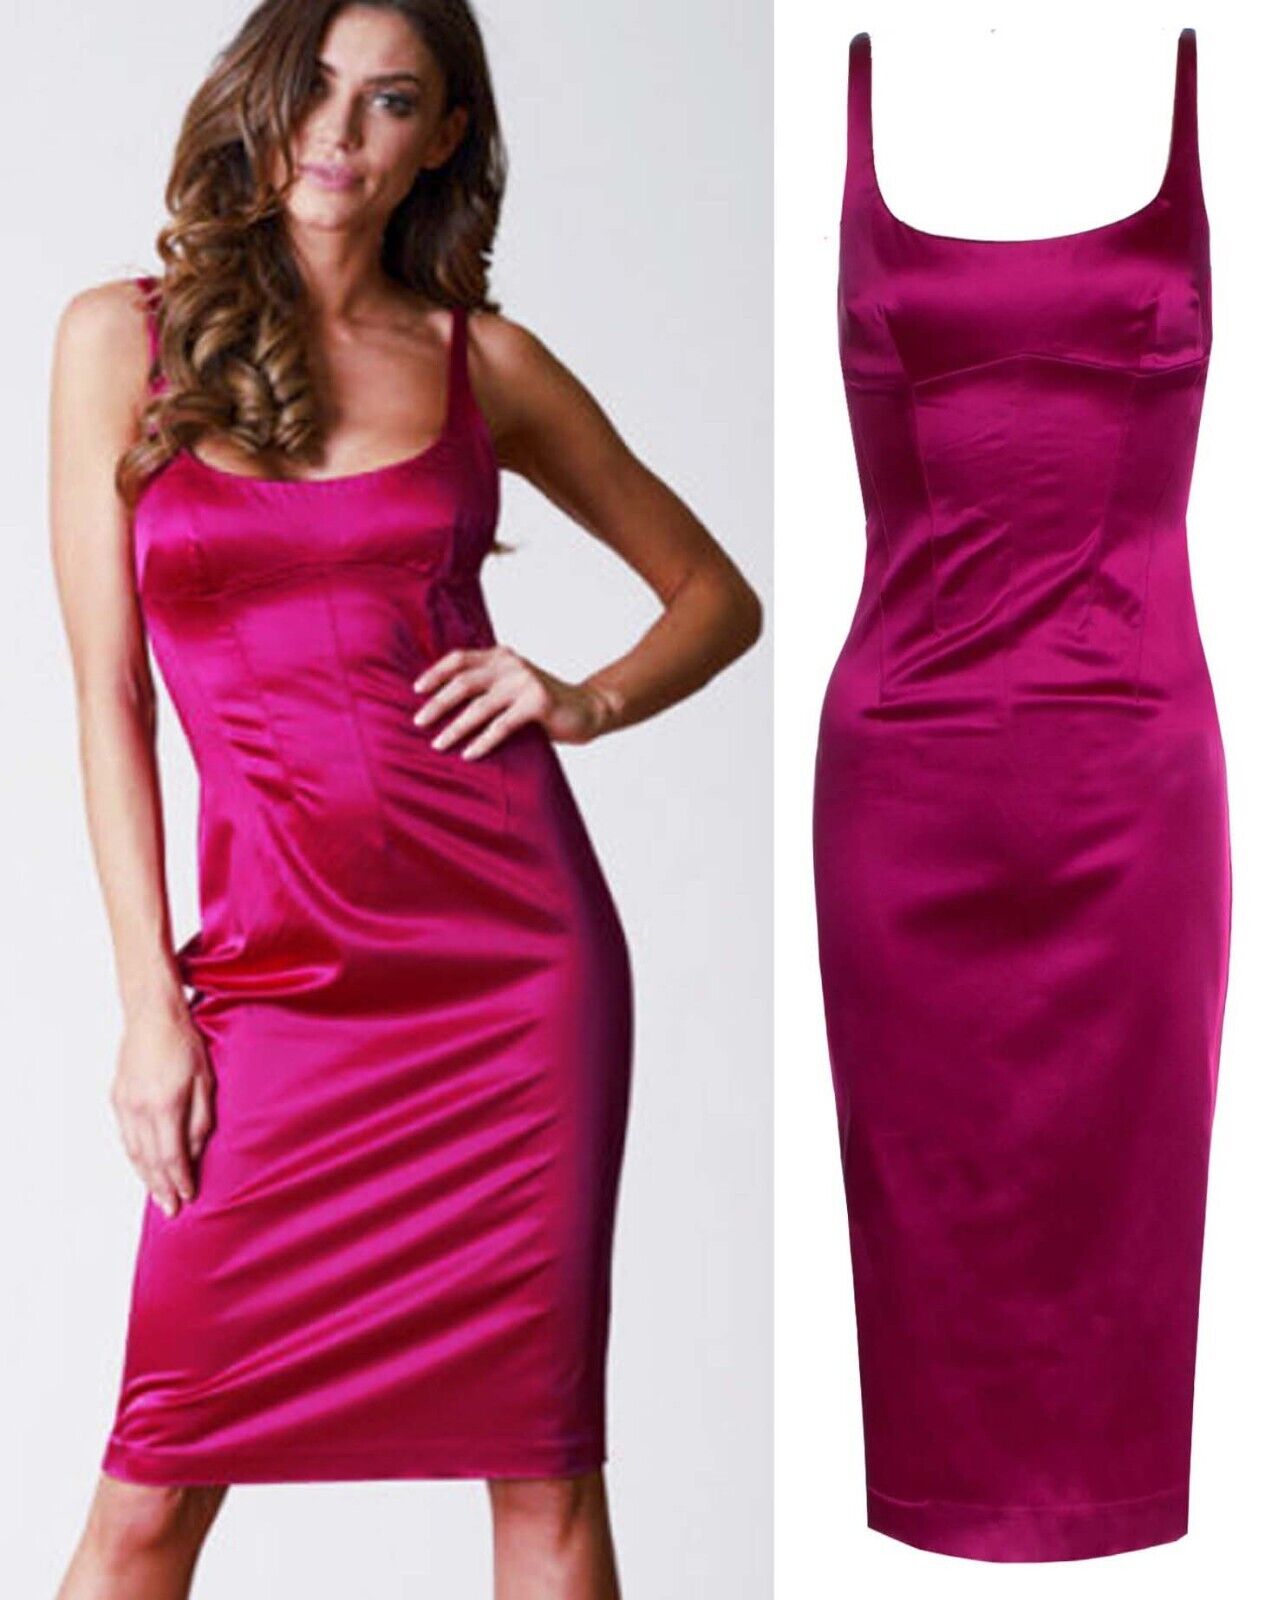 SALE DOLCE & GABBANA ITALY Hot pink Satin dress size 40-42 